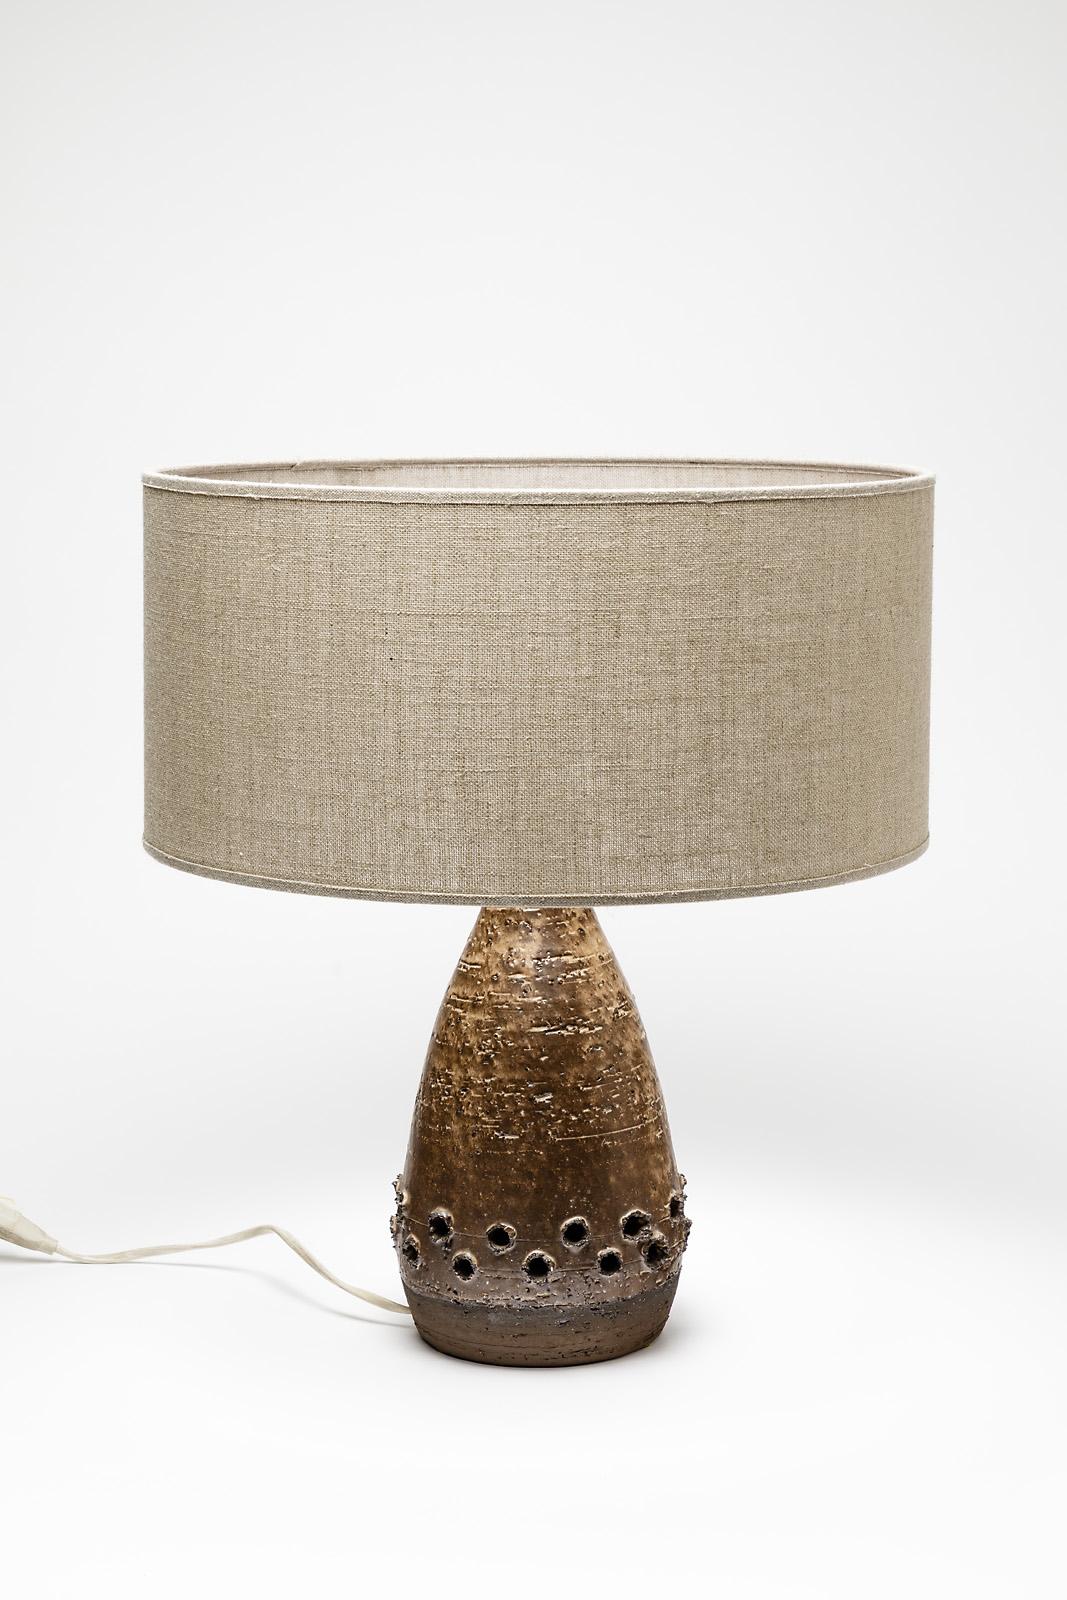 20th Century Brown Midcentury Design Ceramic Table Lamp by Roh B, circa 1970